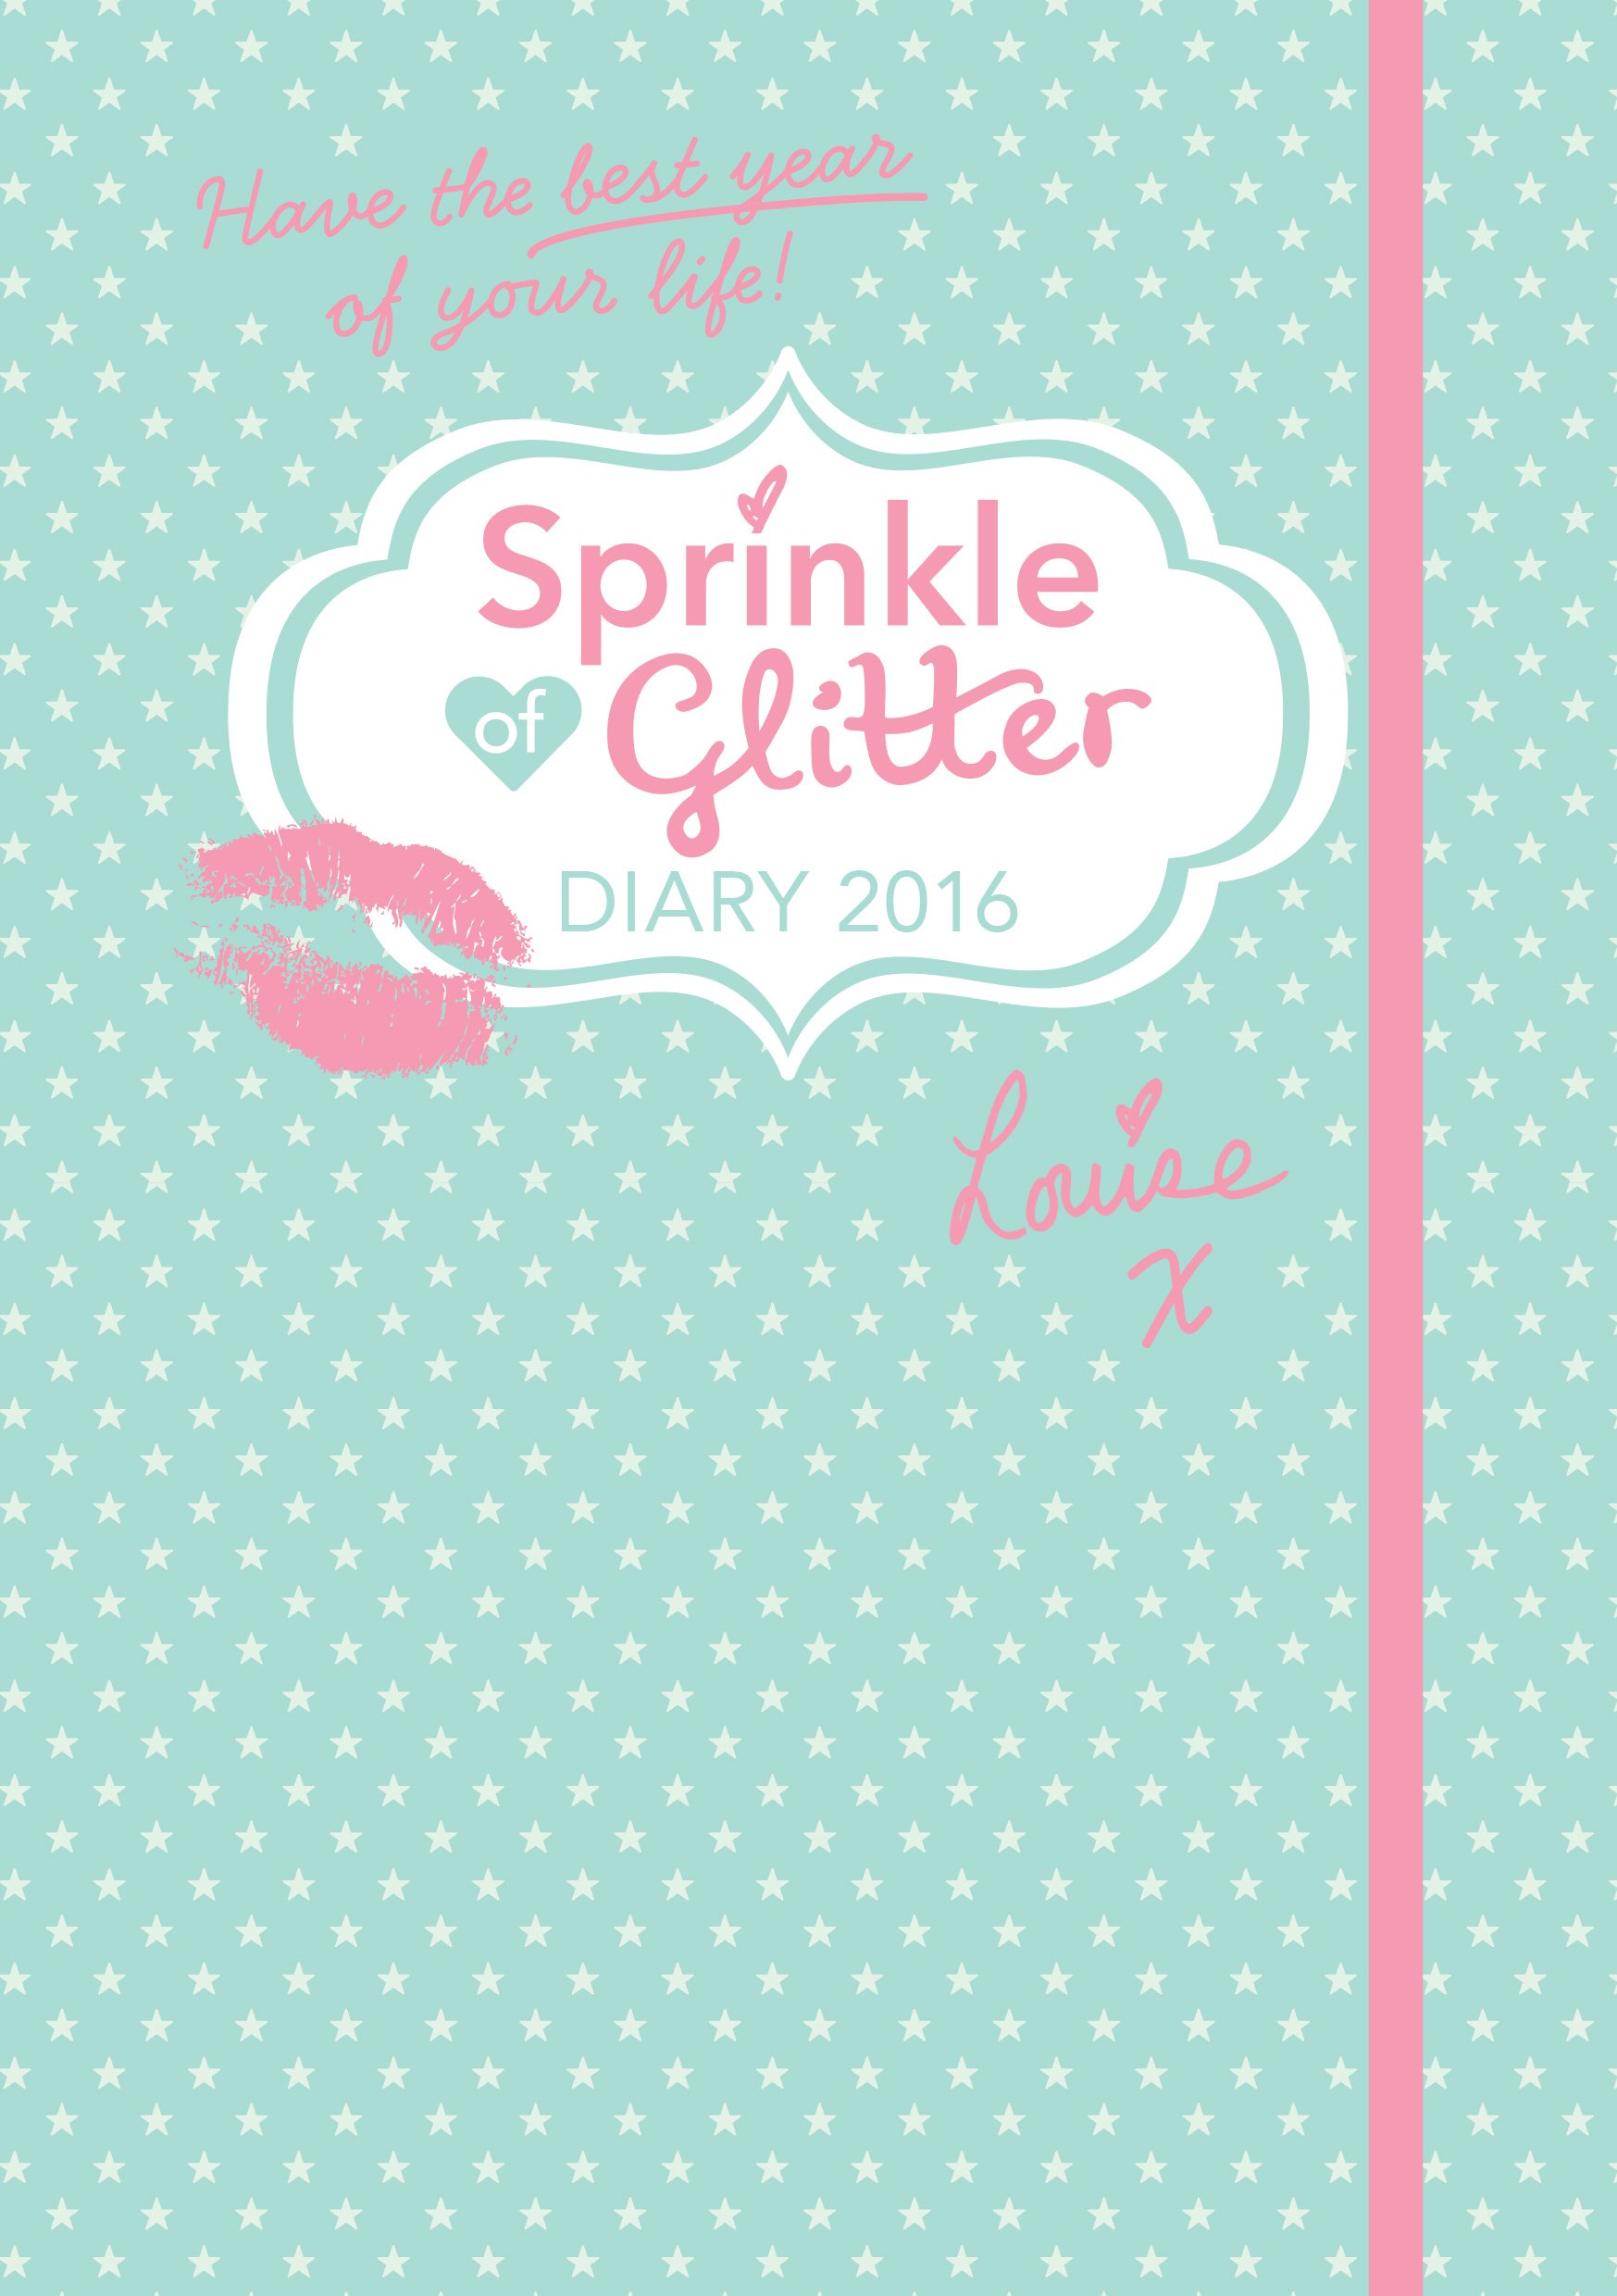 Sprinkle of Glitter 2016 Diary